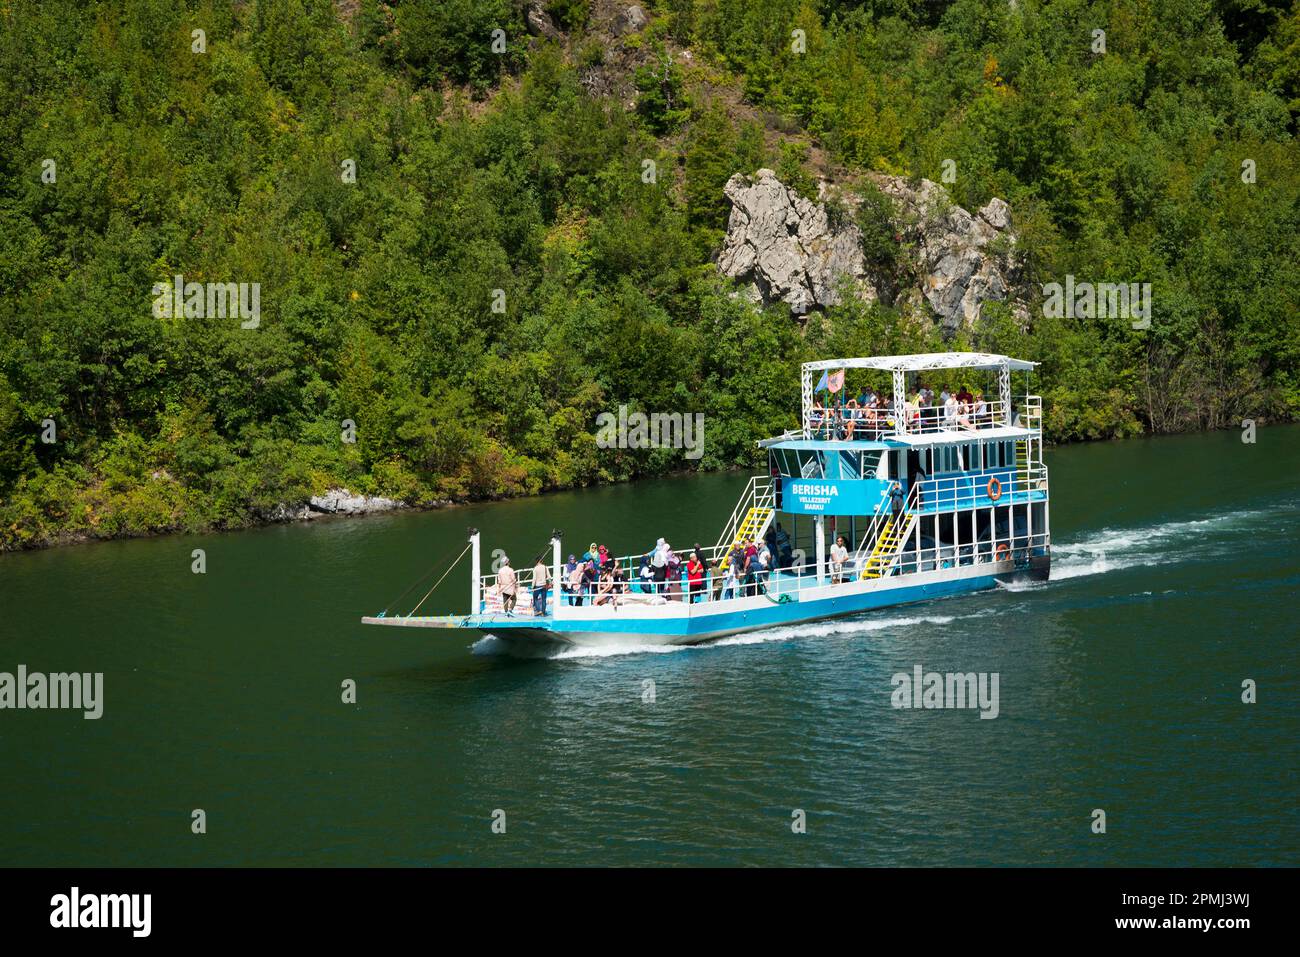 Ferry Berisha, Koman Reservoir, River Drin, Albania Stock Photo